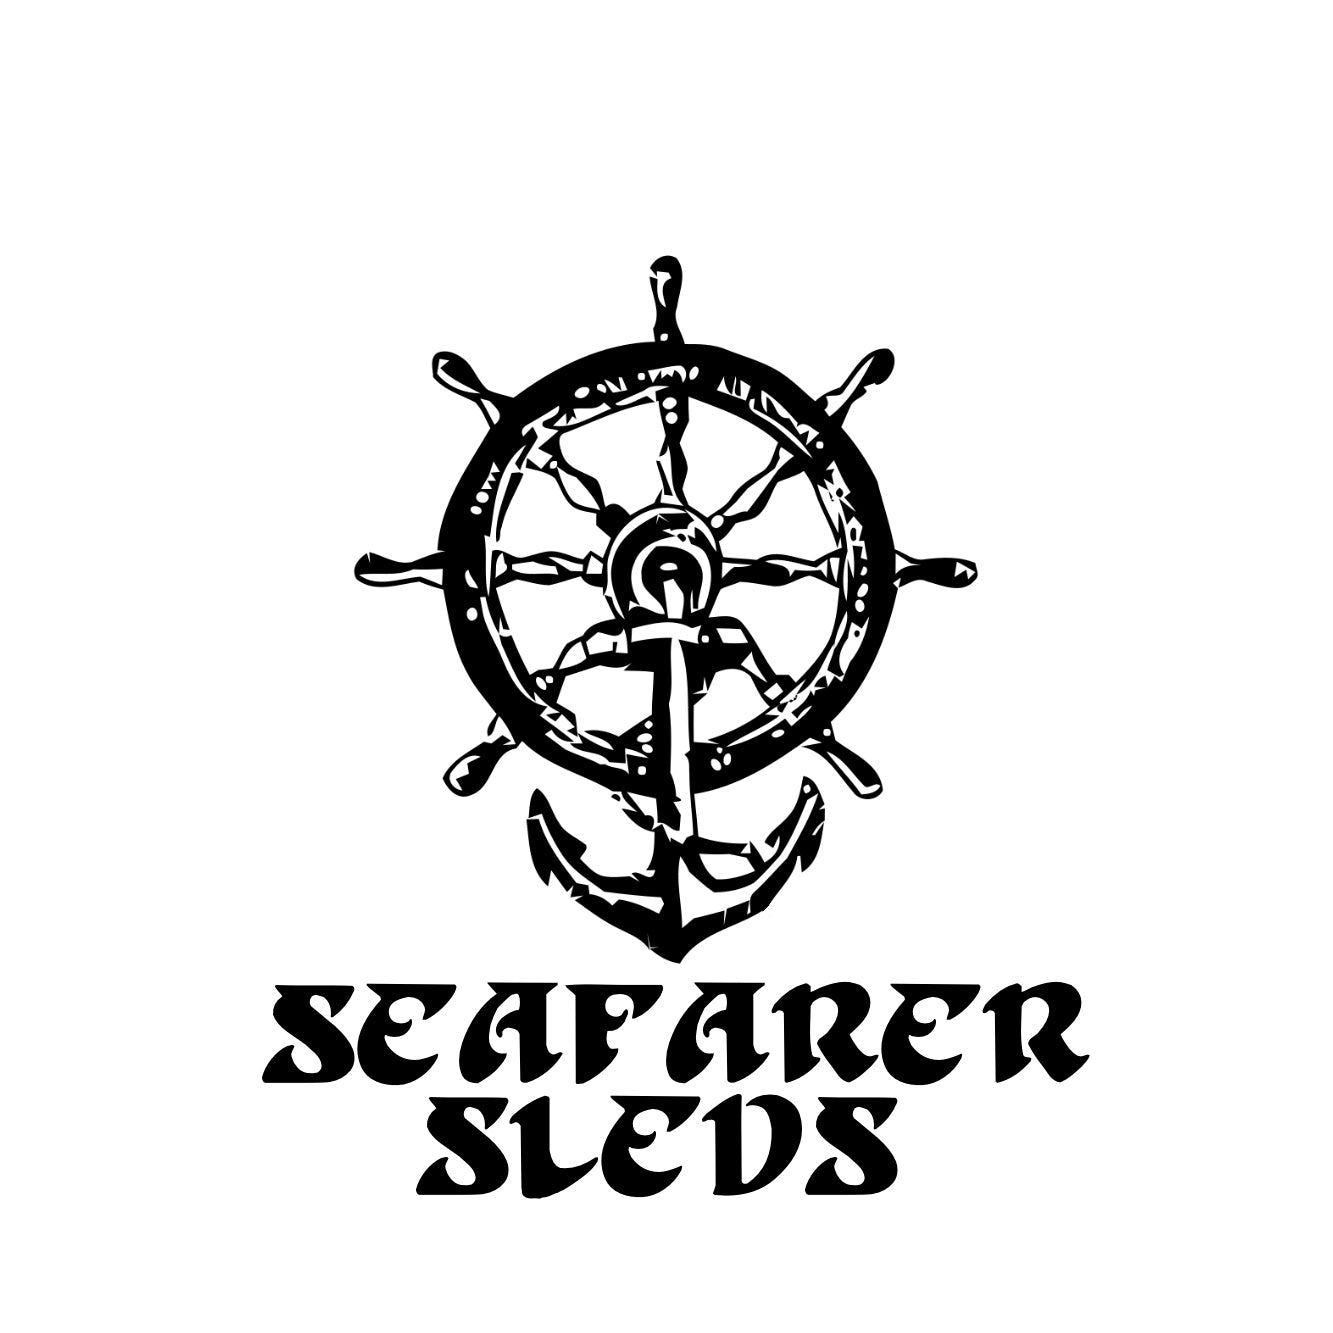 Seafarer Sleds